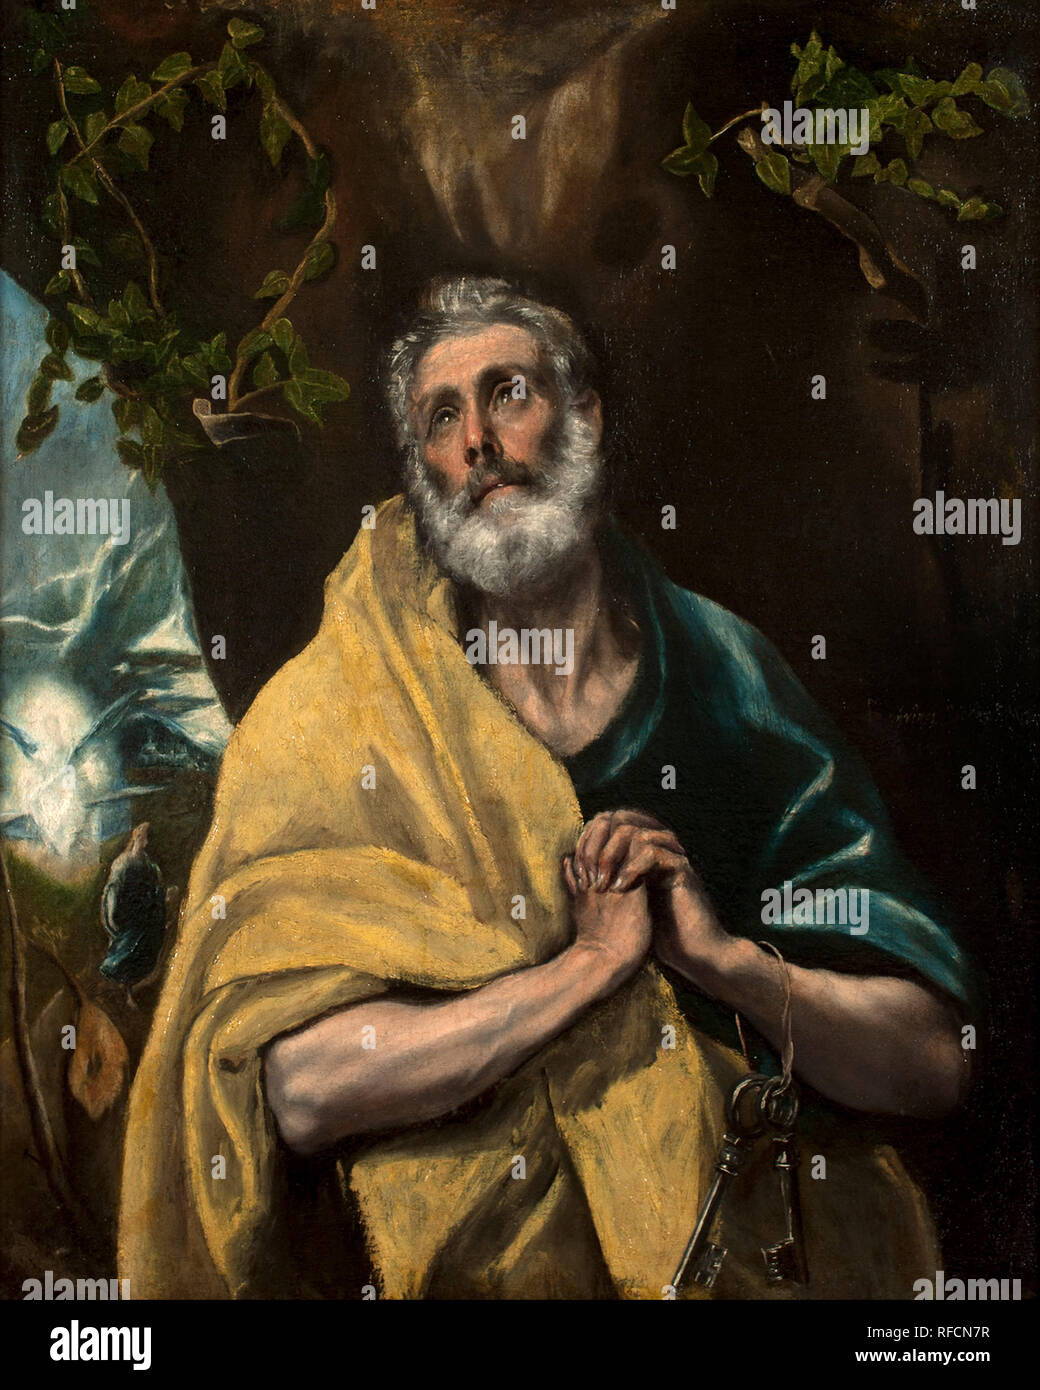 Las lágrimas San Pedro o San Pedro en lágrimas / Saint Peter in Tears. Date/Period: Ca. 1587-1596. Painting. Oil on canvas. Height: 109 cm (42.9 in); Width: 88 cm (34.6 in). Author: GRECO, EL. Stock Photo